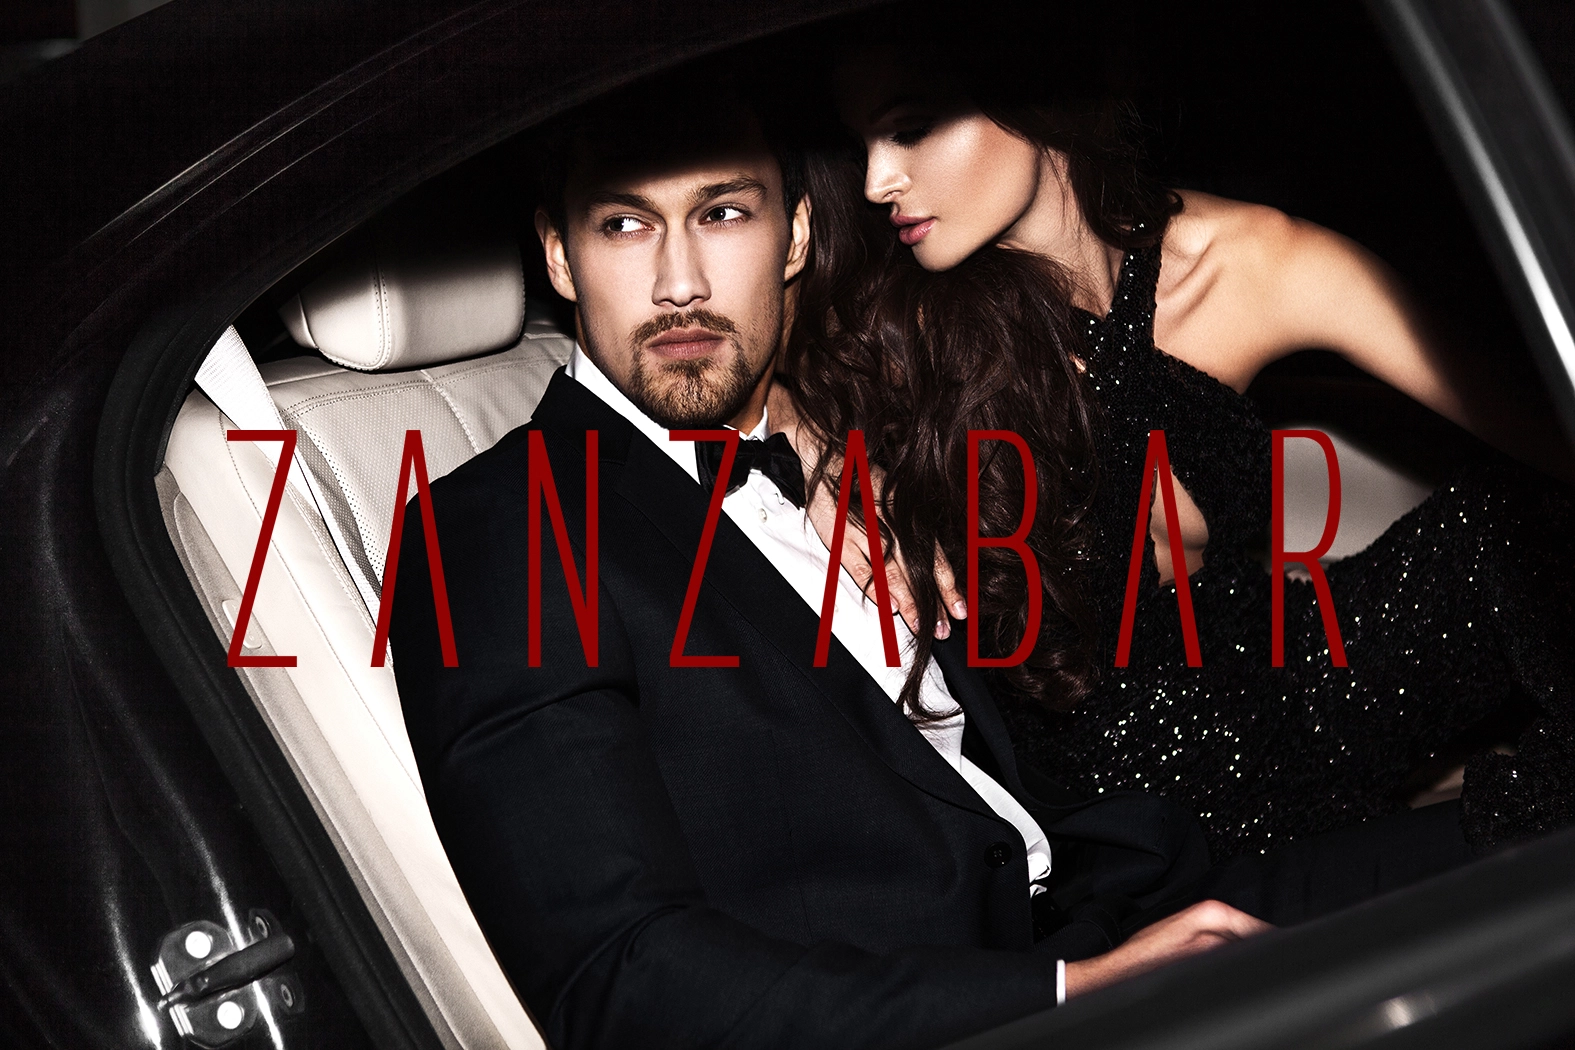 Zanzabar lifestyle image with logo.